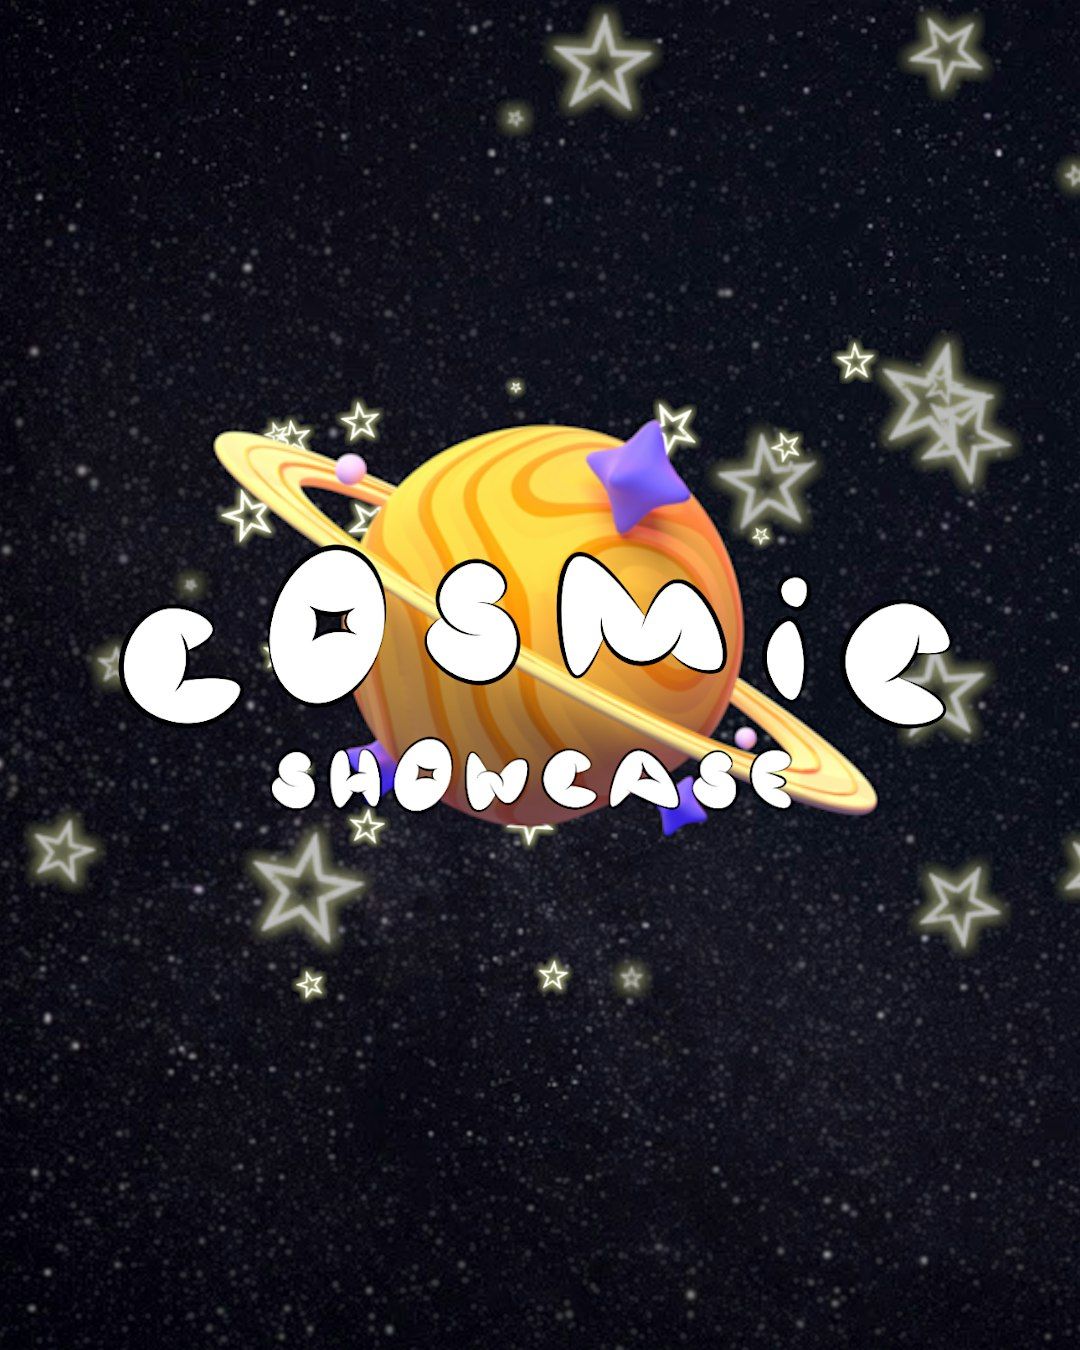 Cosmic Showcase!